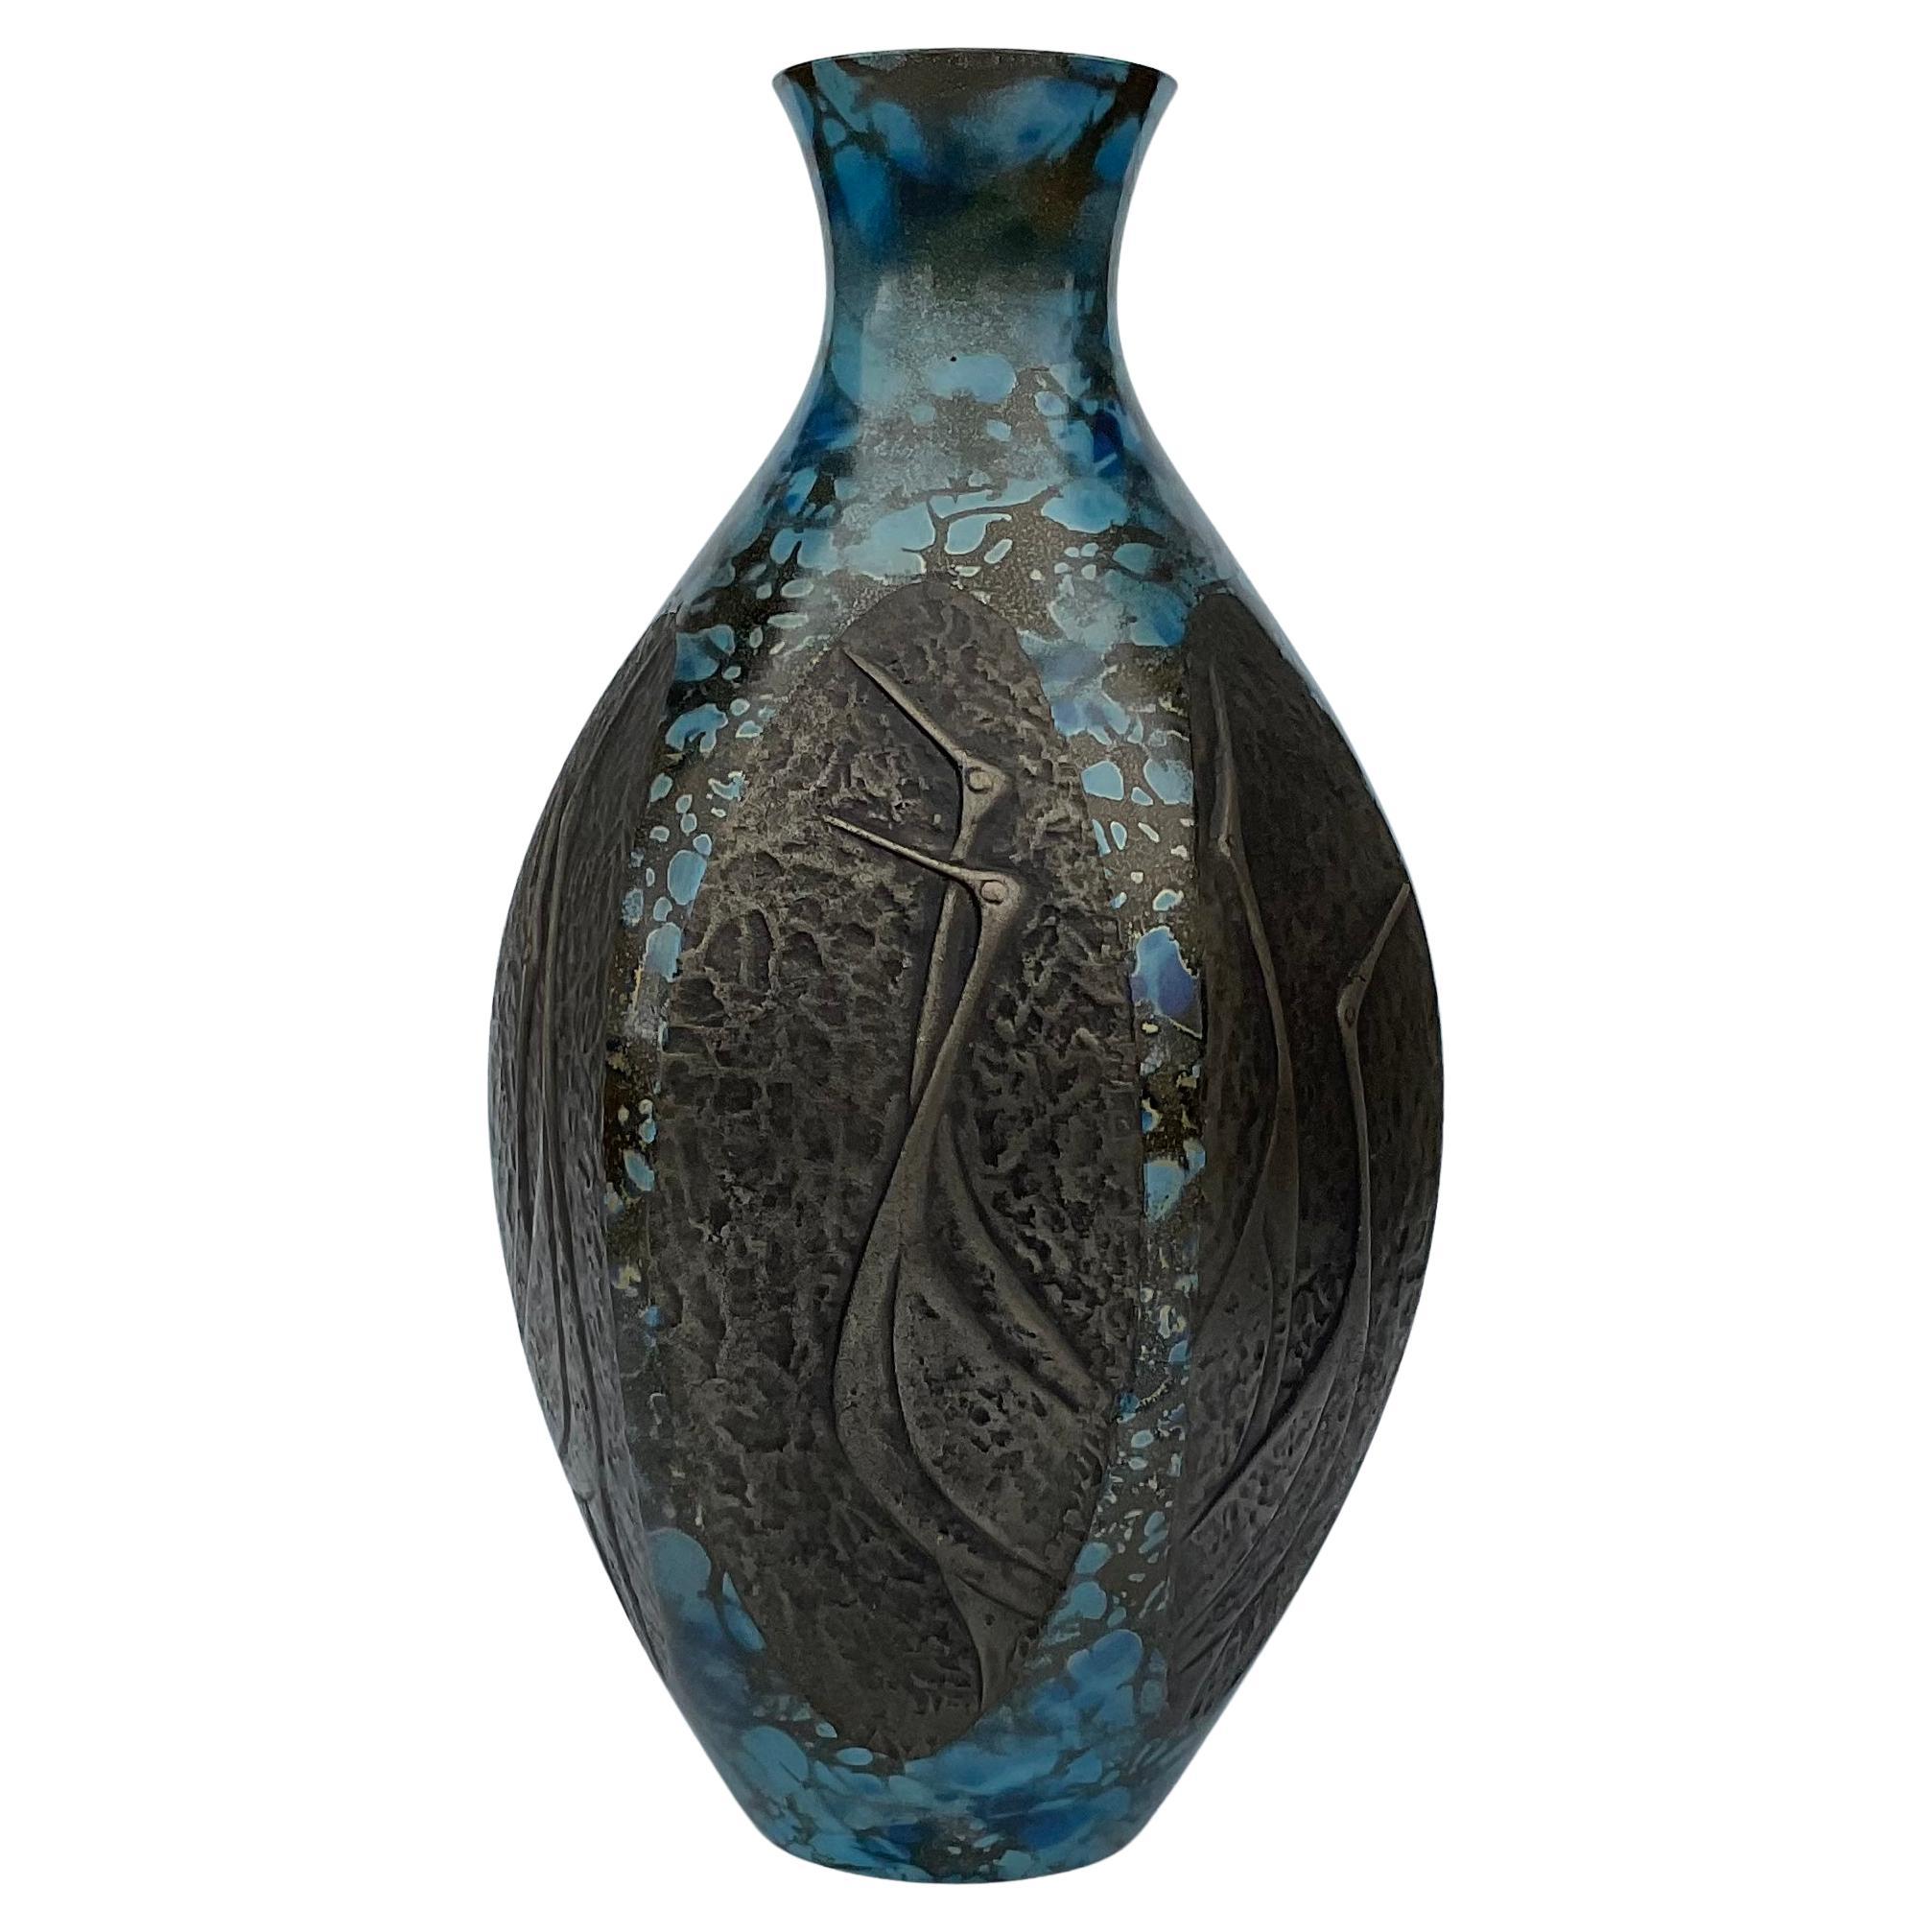 Heavy Japanese Bronze and Enamel Vase with panels of birds Artist signed RARE Example. Beautiful vibrant blue enamel work.